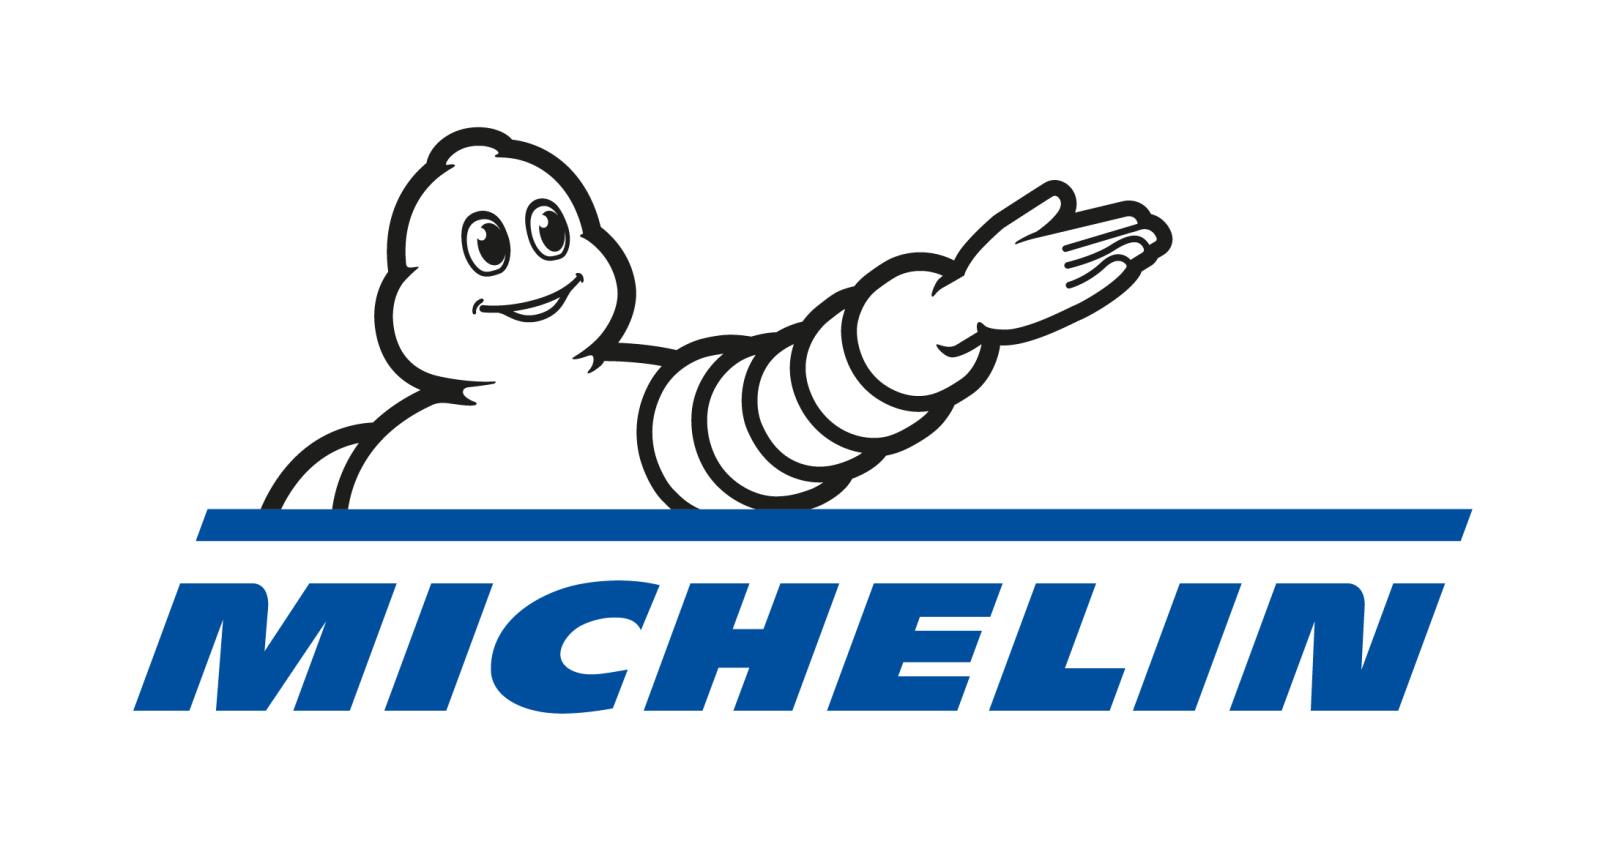 Michelin Vector Logo | Free D